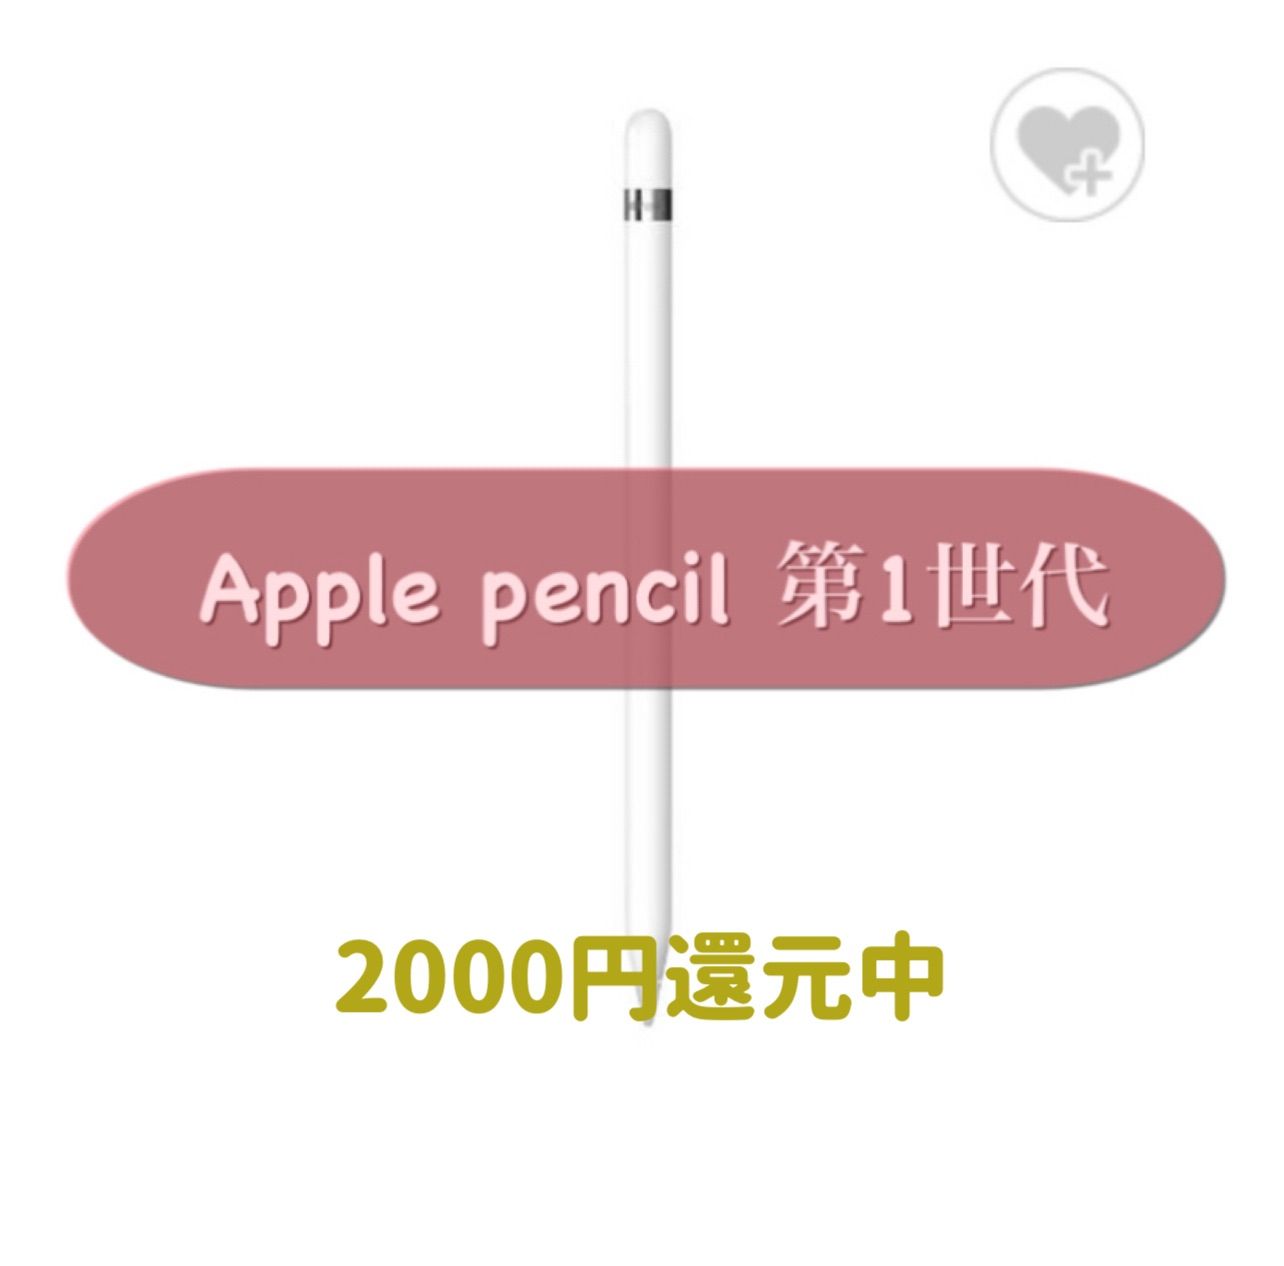 Apple pencil 第1世代 定価14880円 - メルカリ